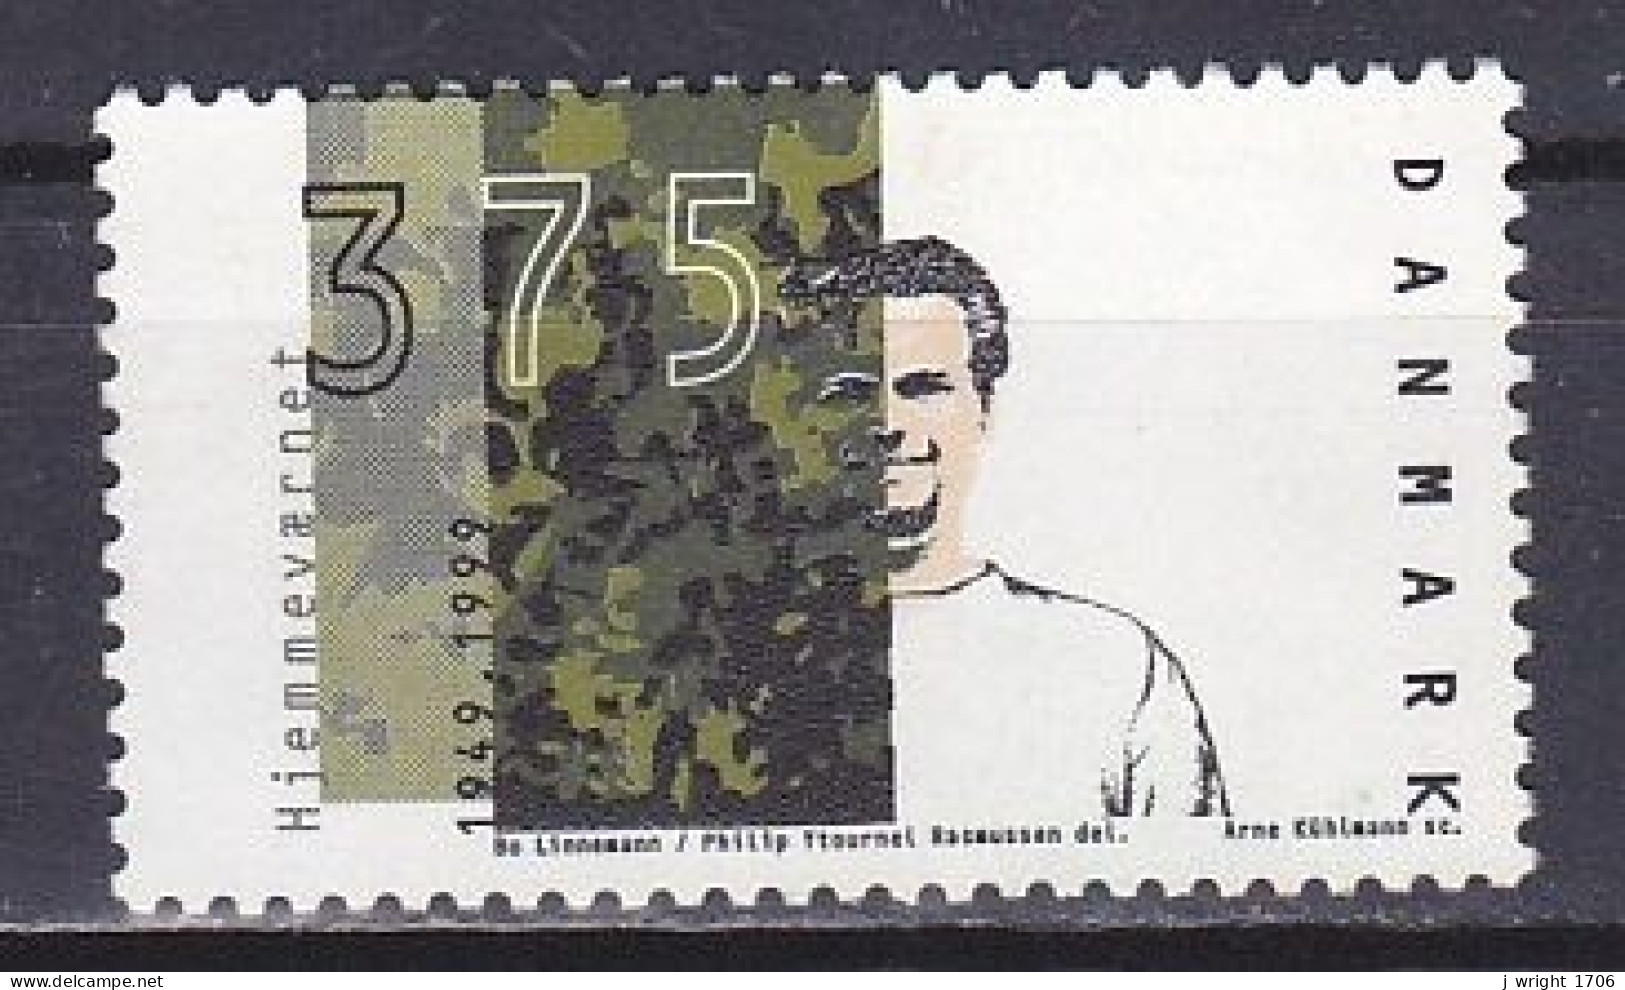 Denmark, 1999, Home Guard 50th Anniv, 3.75kr, USED - Oblitérés